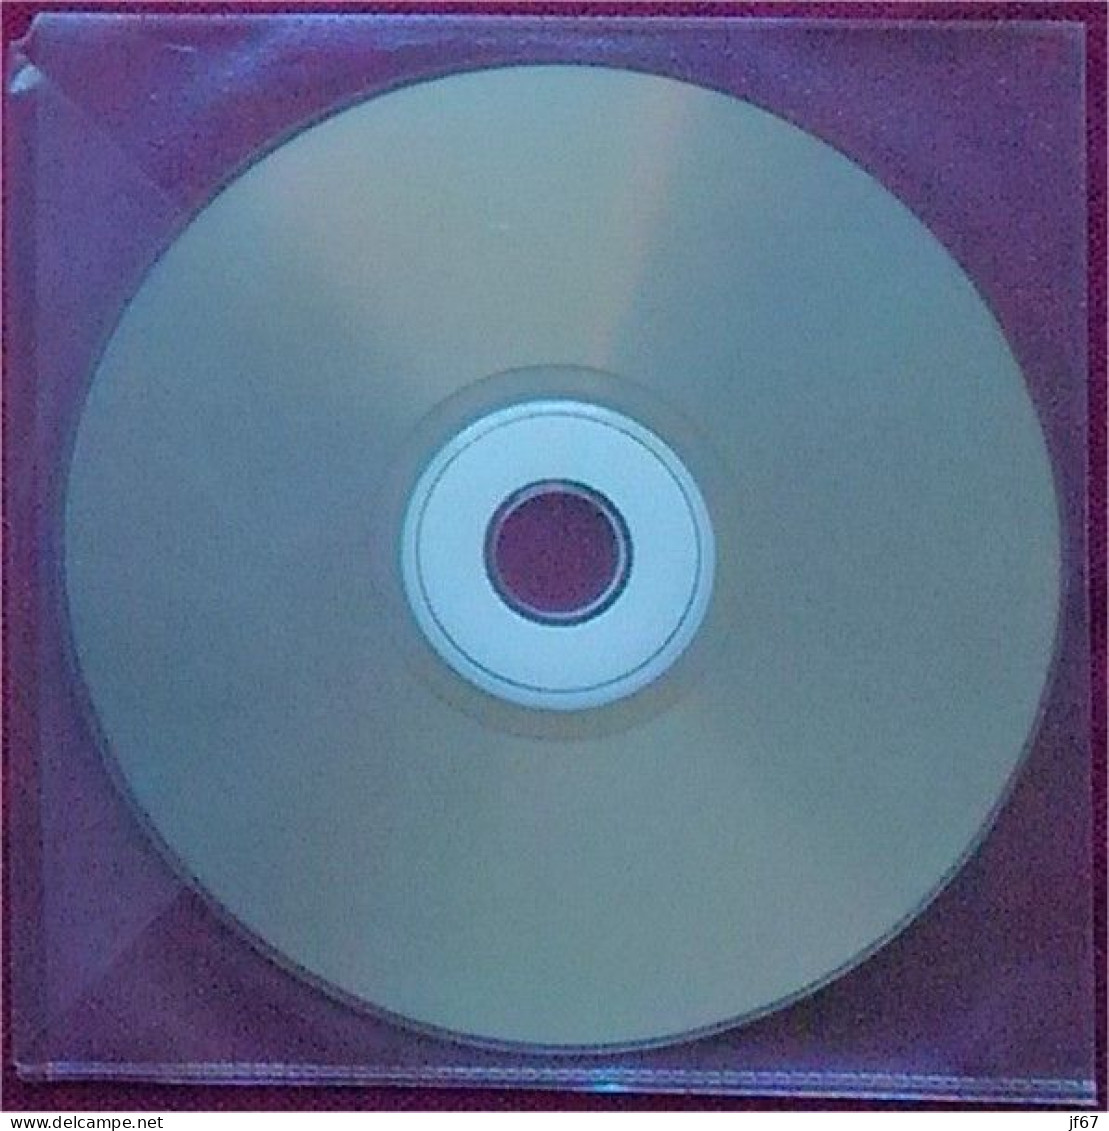 Marco Prince, Antidote – Total Western (CD Single) - Soundtracks, Film Music